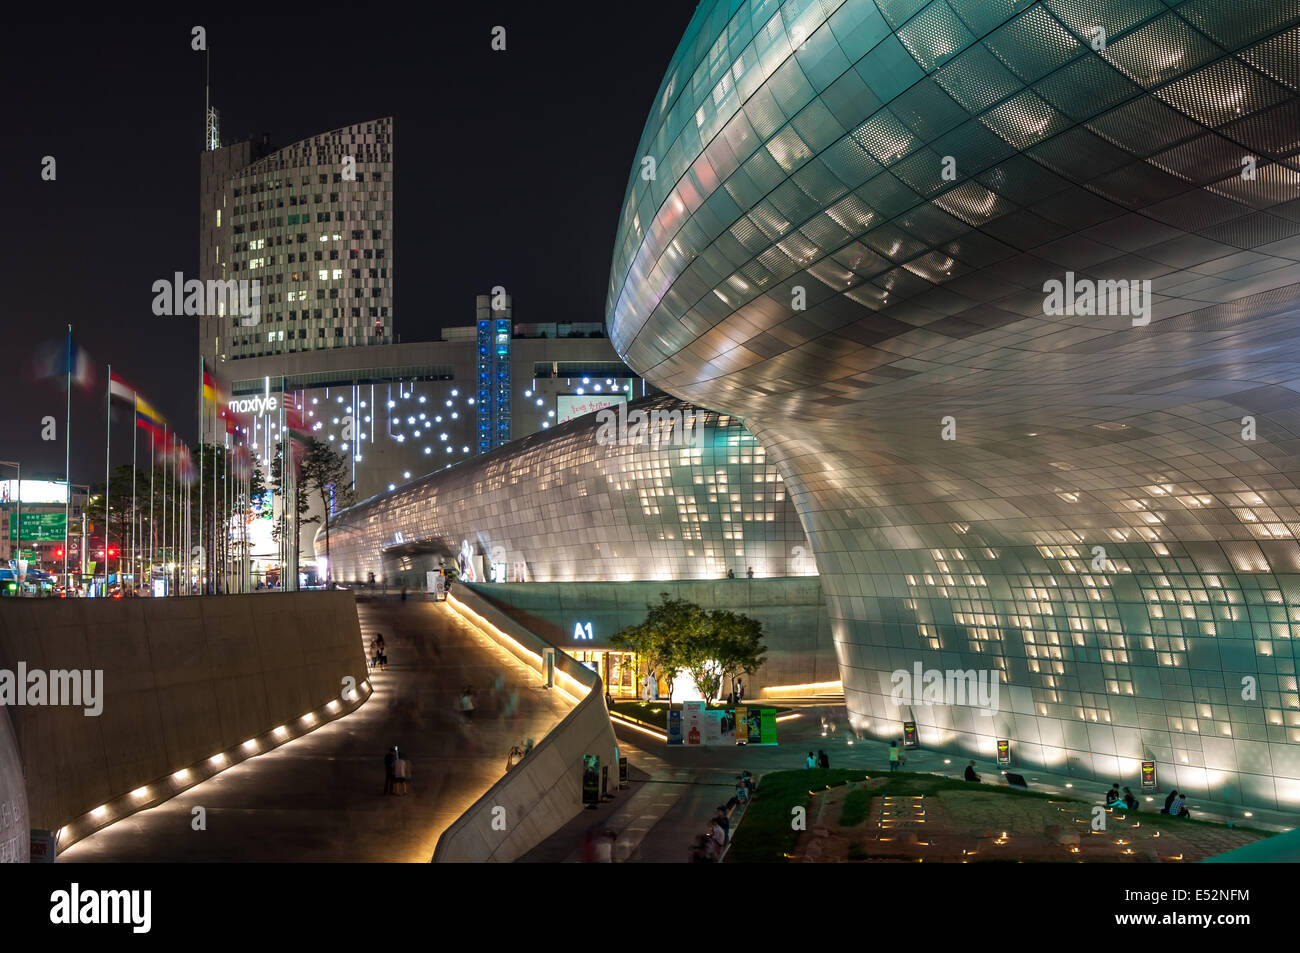 Dongdaemun Design Plaza is a new urban development in Seoul, South Korea, designed by Zaha Hadid. Stock Photo